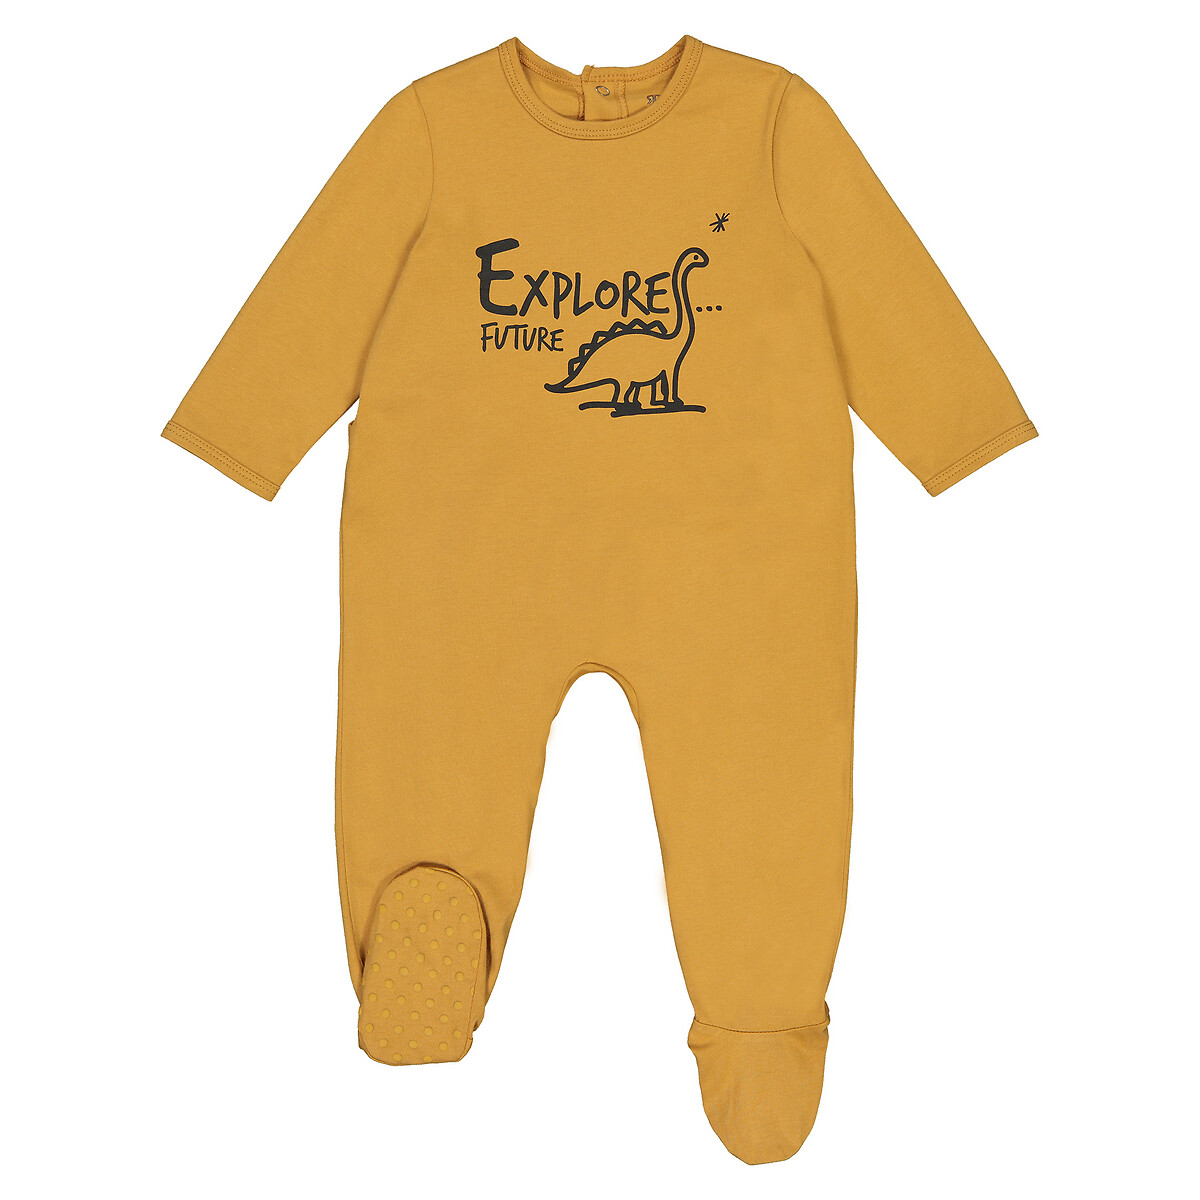 Пижама LaRedoute Цельная из биохлопка 0 мес-3 года 1 год - 74 см желтый, размер 1 год - 74 см